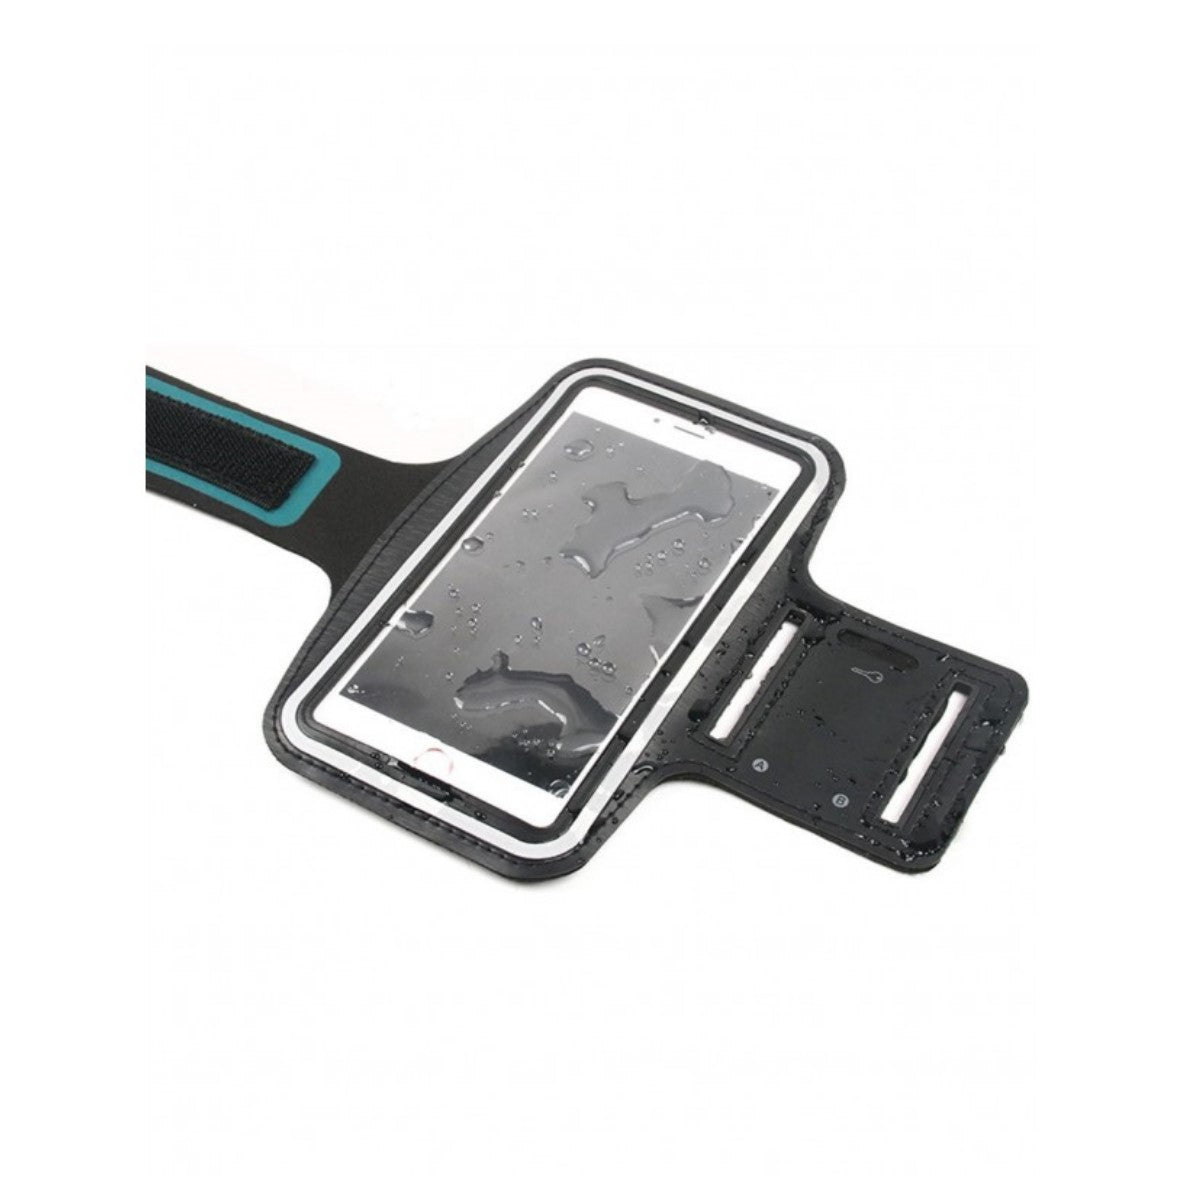 Armband für Sony Xperia 5 IV Sportarmband Handy Tasche Fitness Jogging Handyhülle